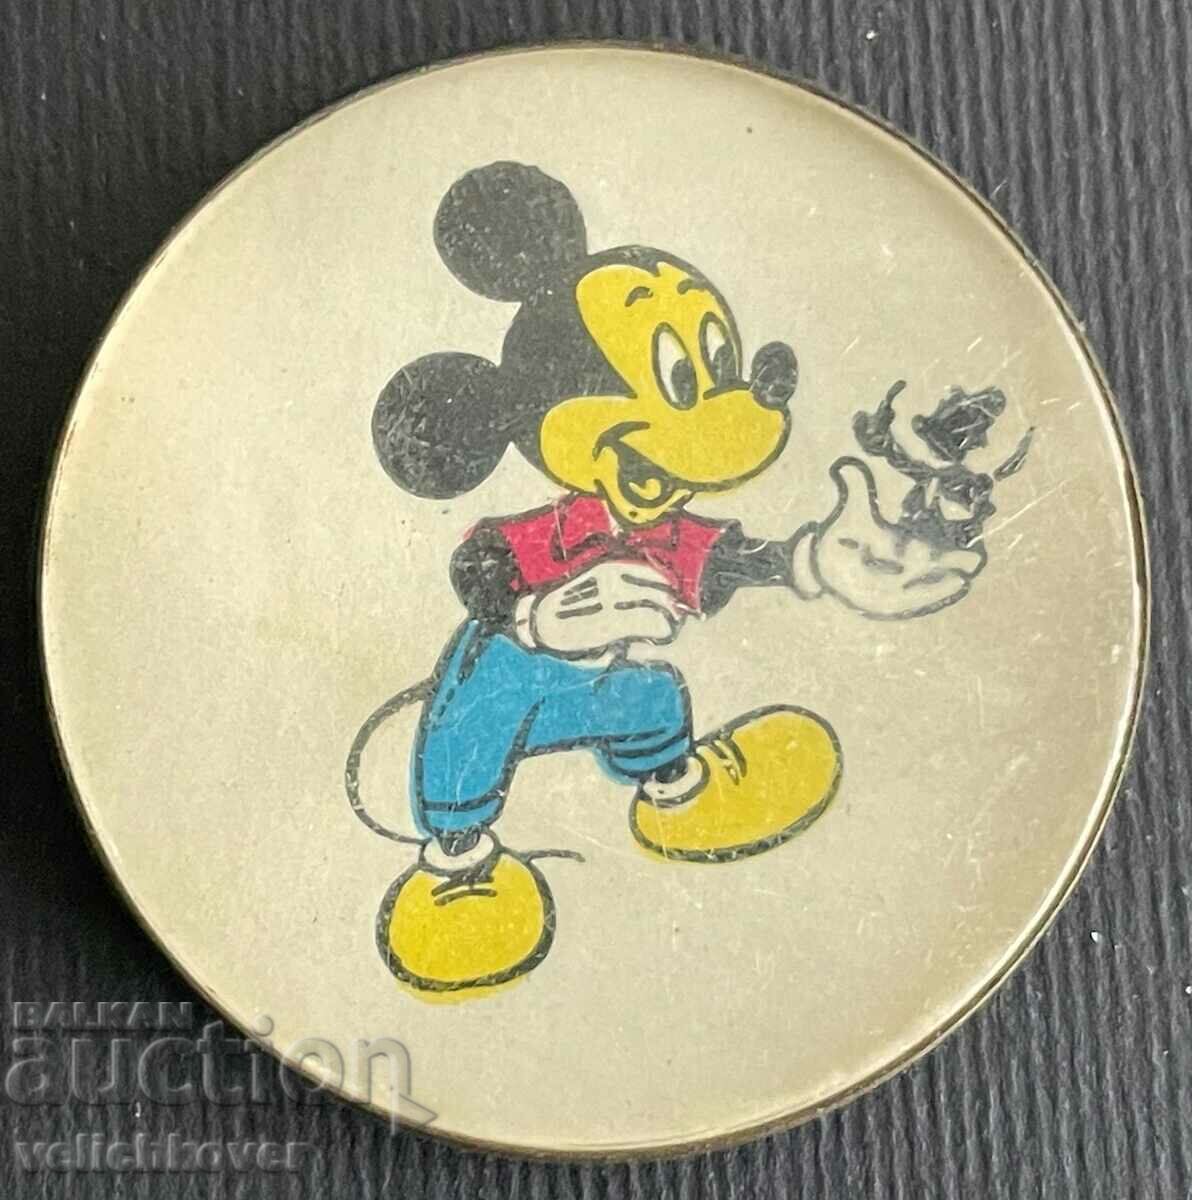 34683 Insigna URSS personaj de desene animate Mickey Mouse